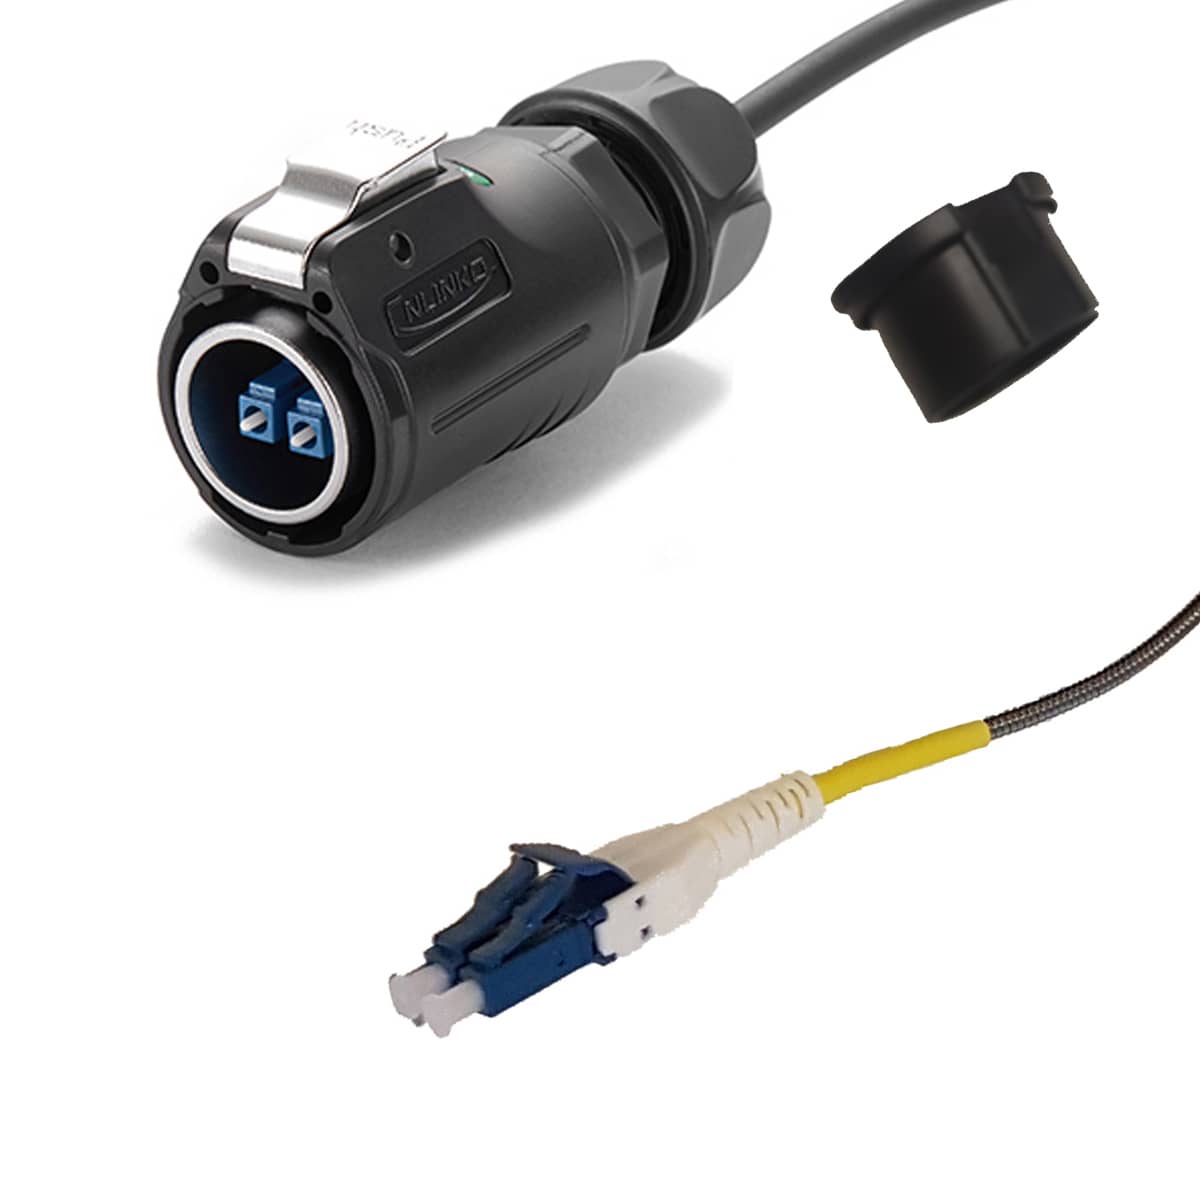 https://connector-distribution.com/media/image/9d/e4/74/CDG-CNLINKO-1x-fibre-Optic-connector-waterproof-IP65-IP67.jpg